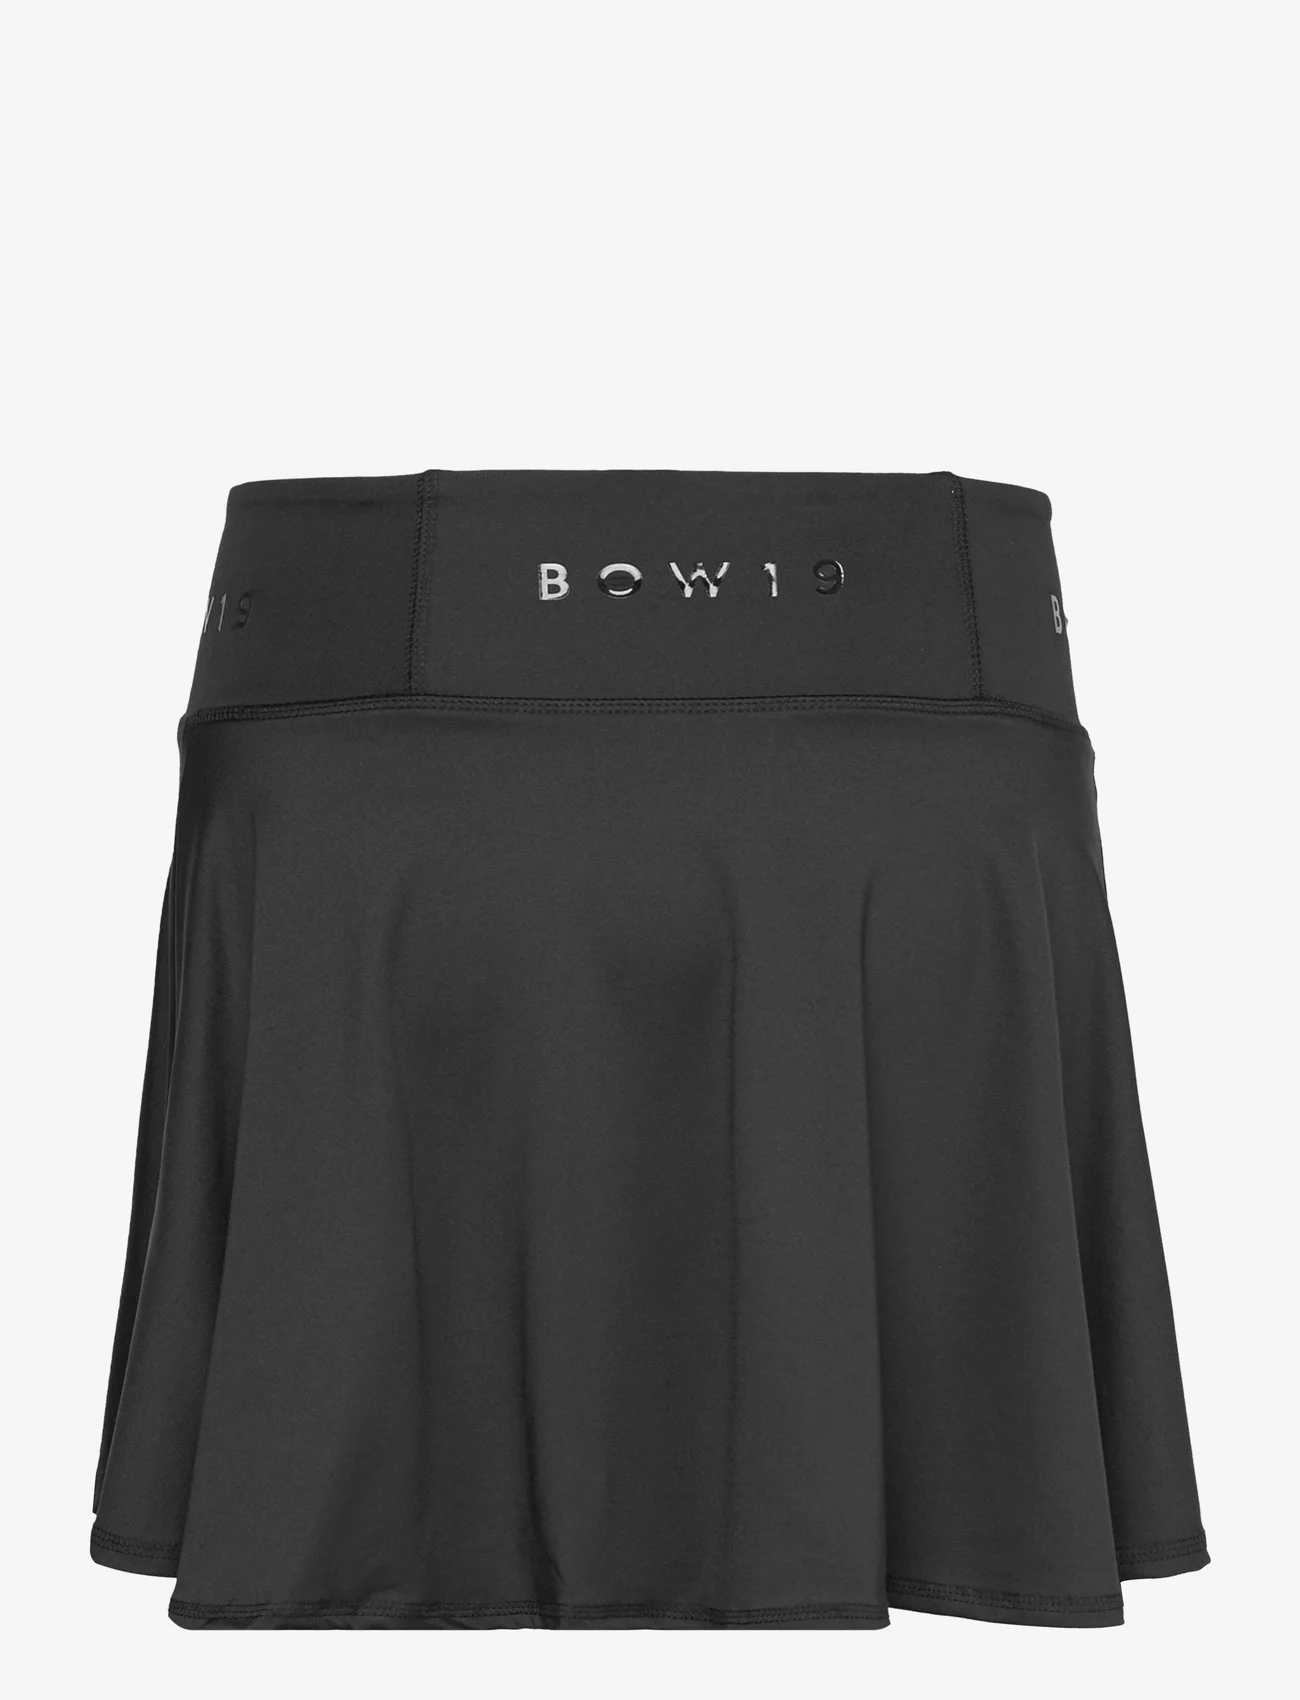 BOW19 - Classy skirt - faltenröcke - black - 1